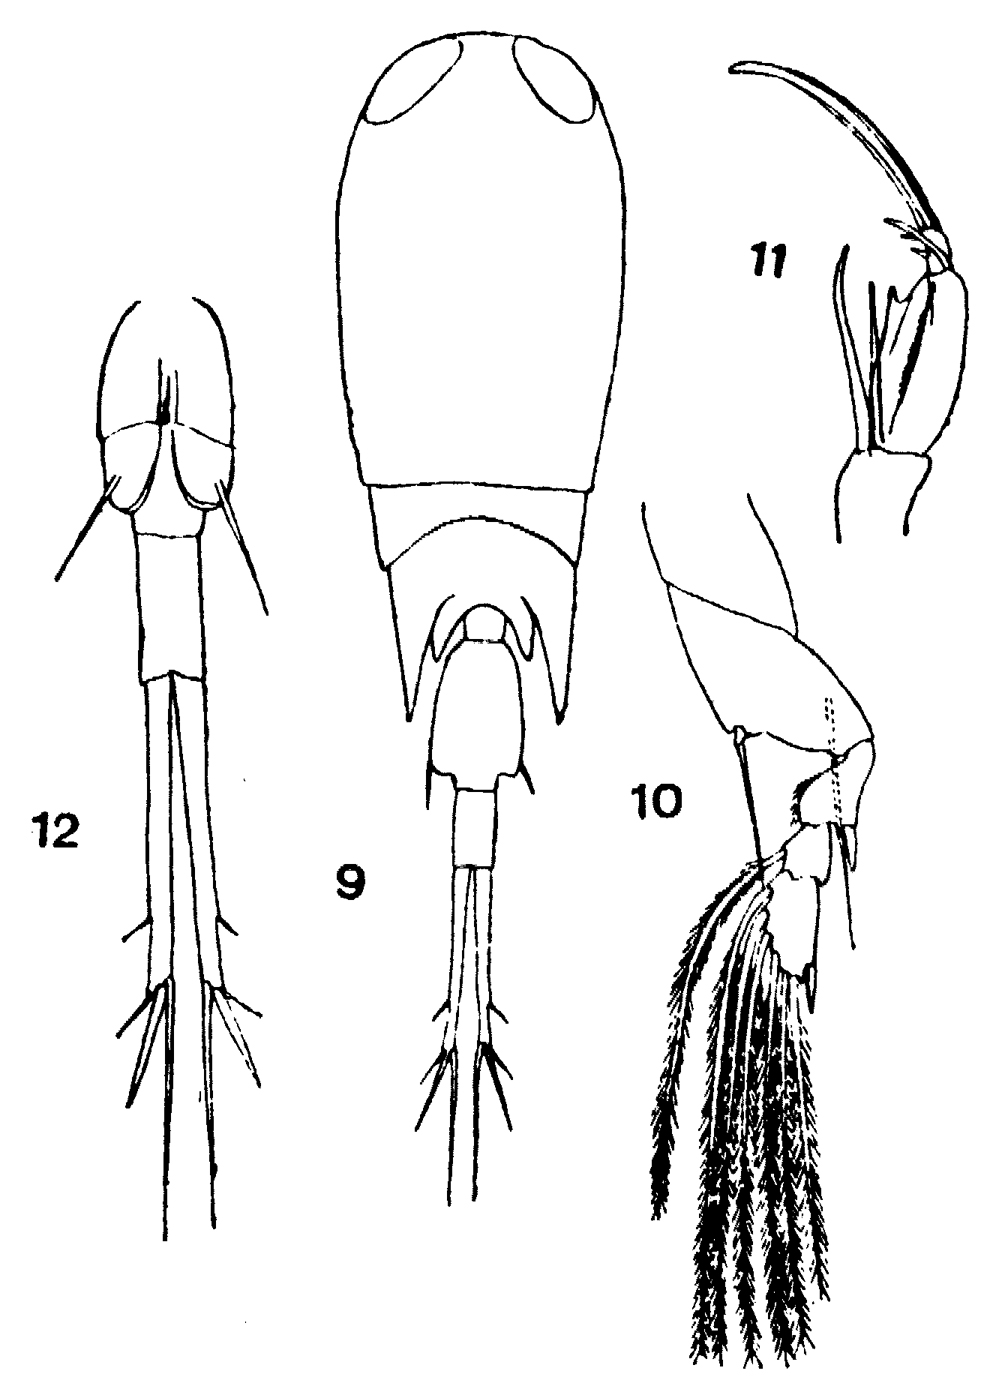 Species Corycaeus (Corycaeus) speciosus - Plate 19 of morphological figures